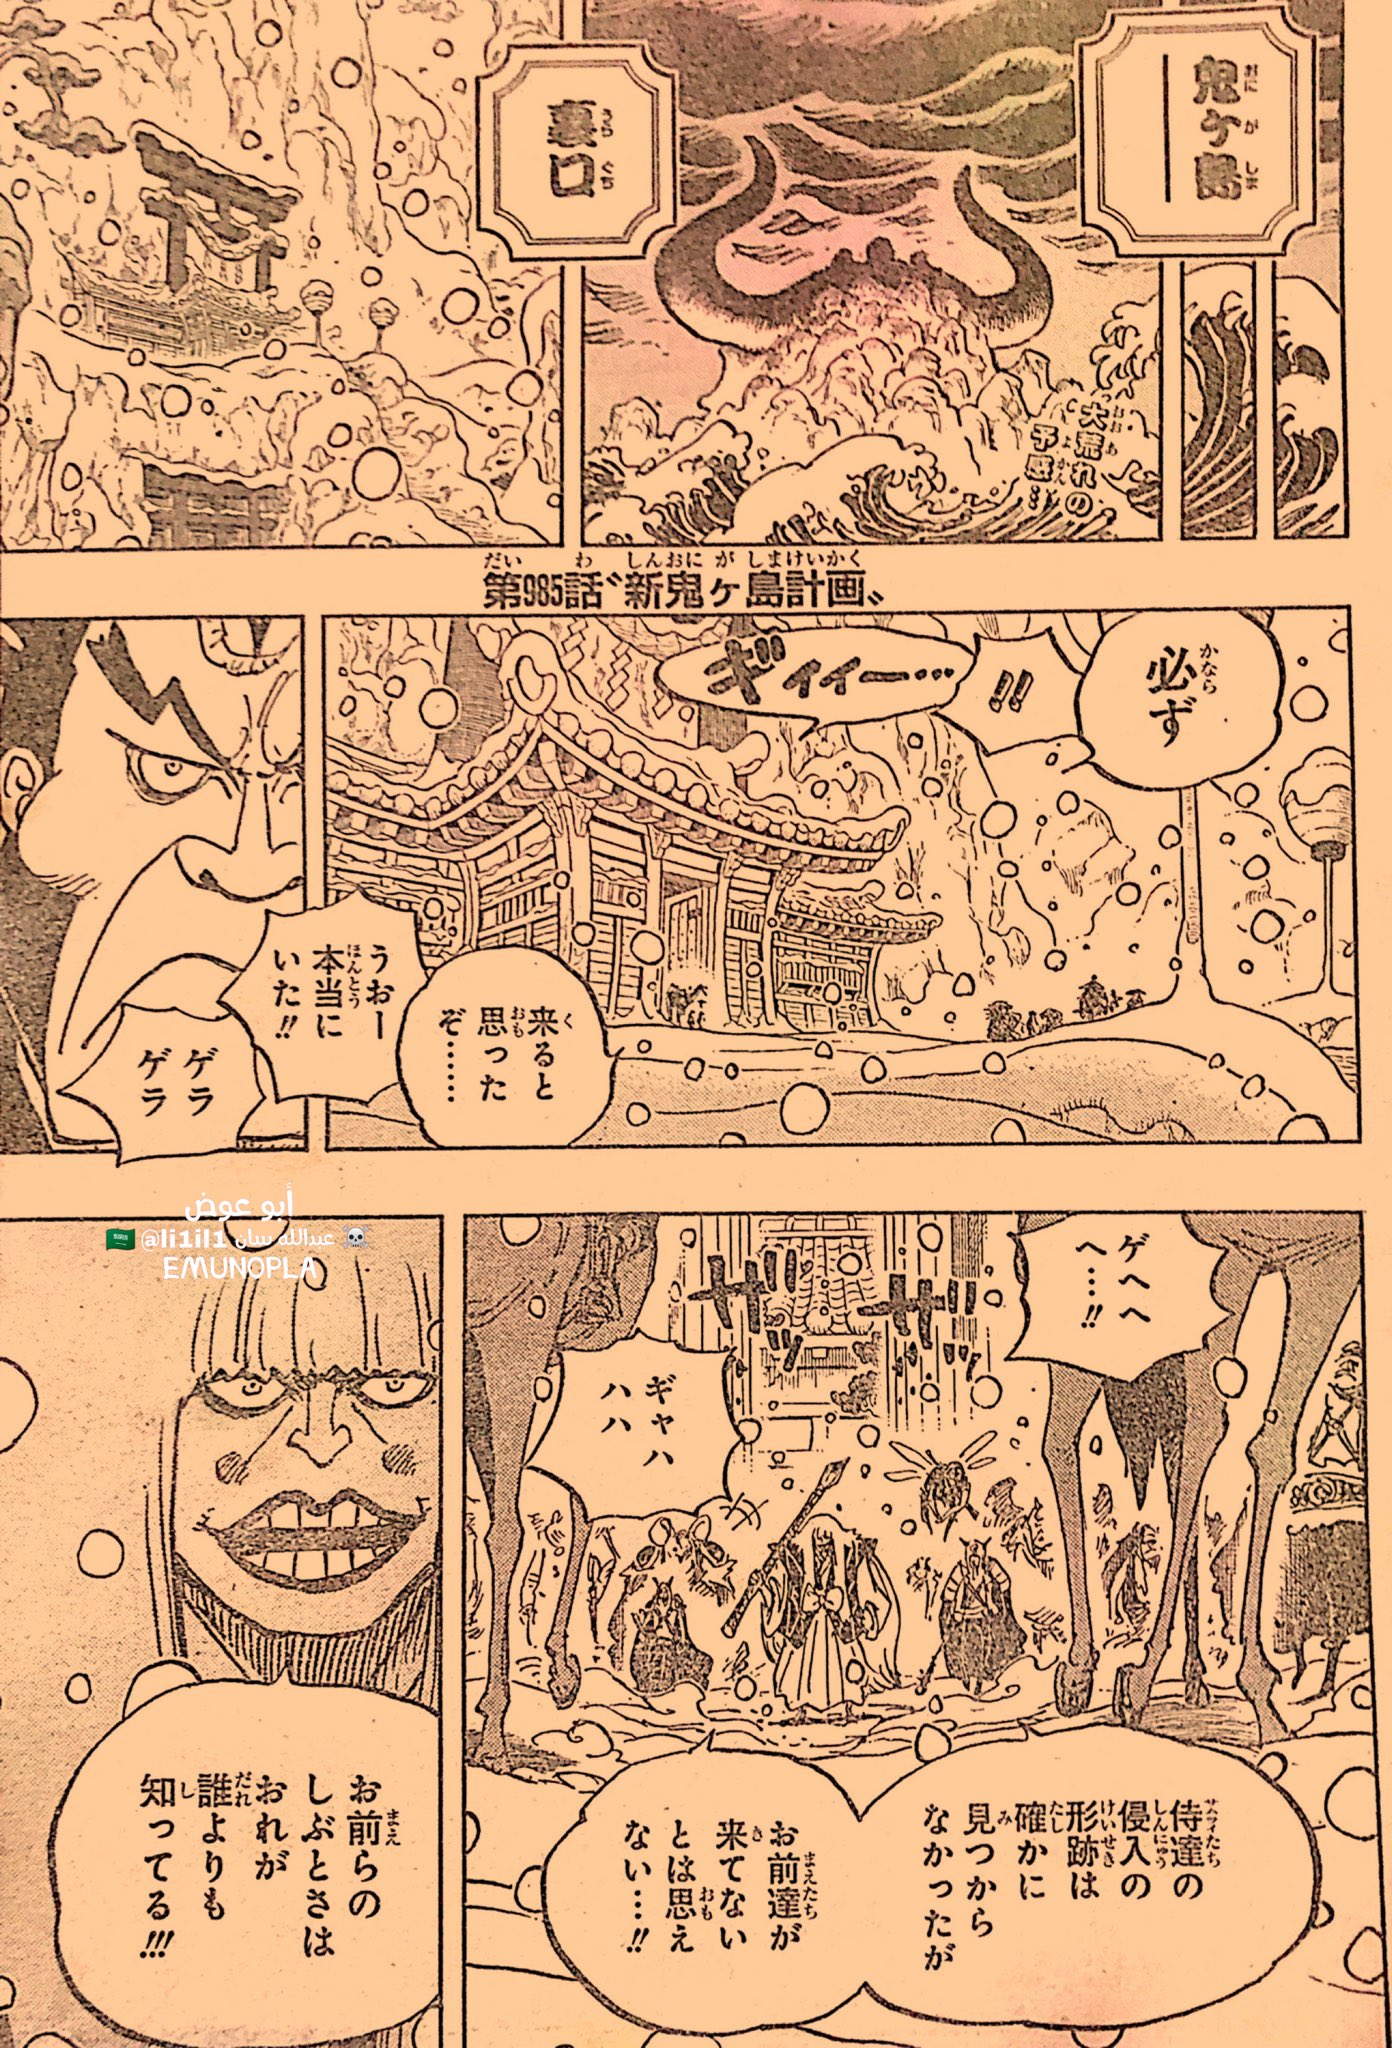 Spoiler One Piece Chapter 985 Spoiler Summaries And Images Page 2 Worstgen